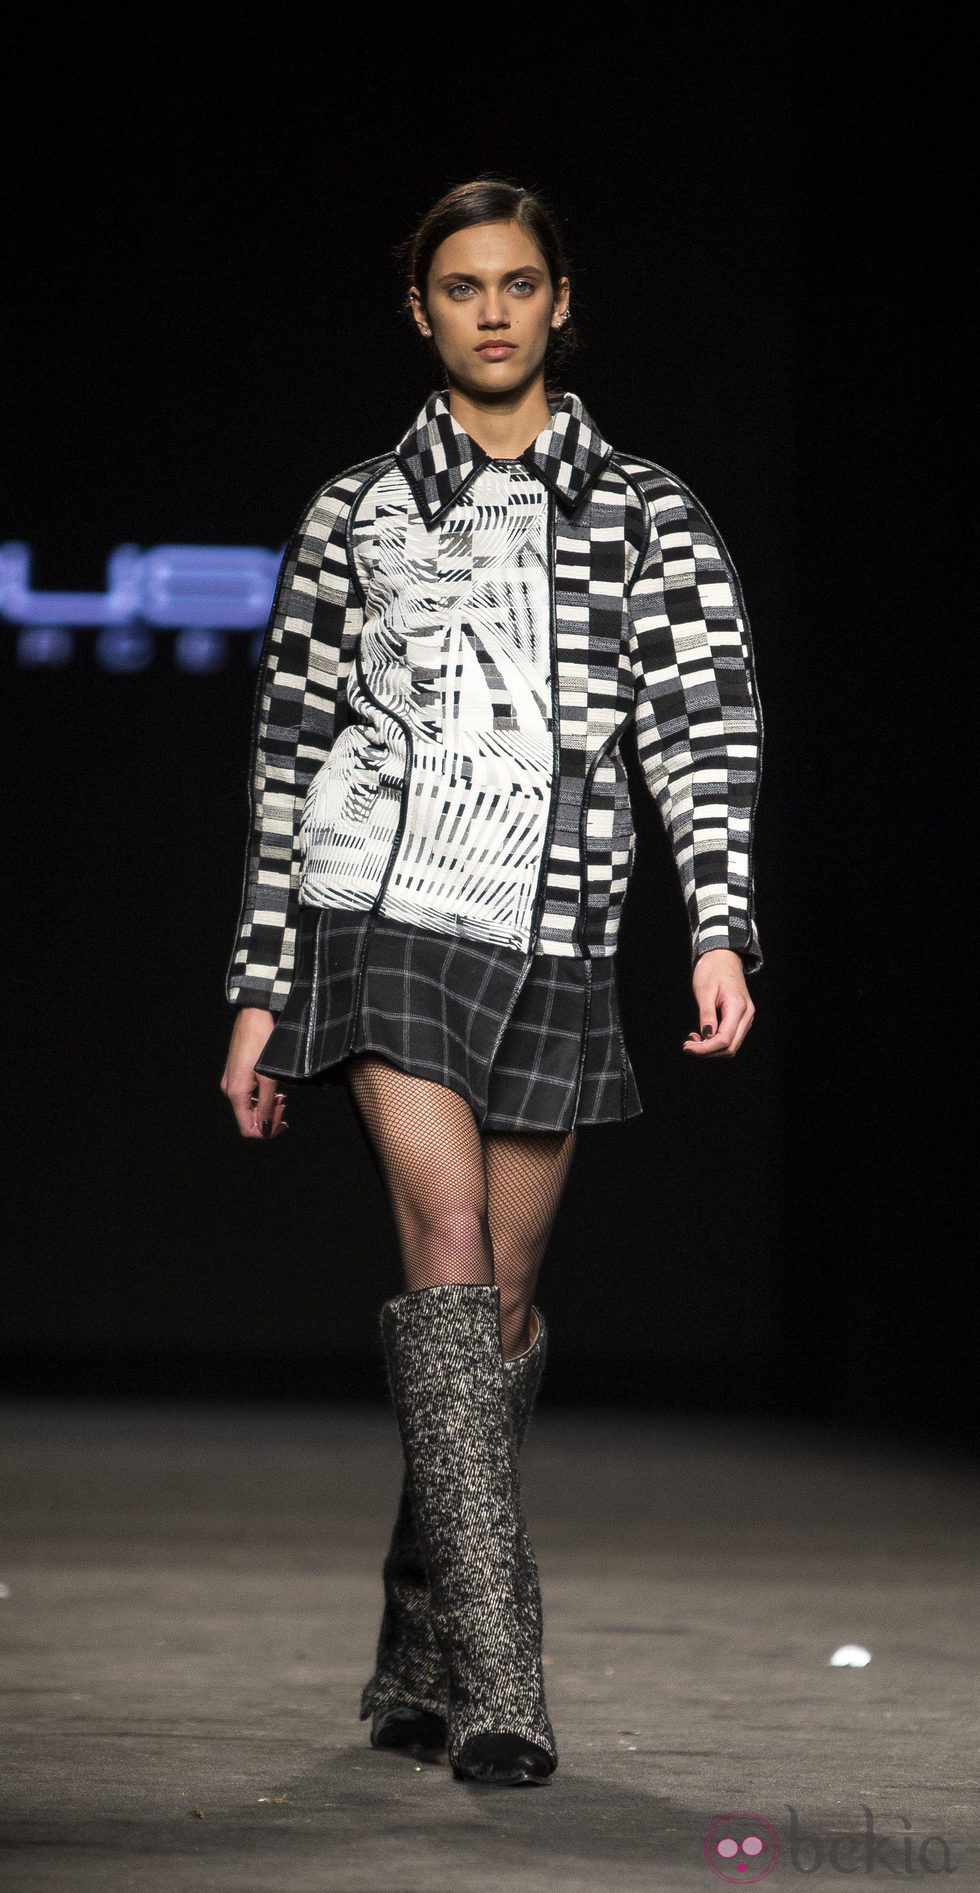 Dalianah Arekion desfilando para Custo Barcelona en la 080 Barcelona Fashion 2015